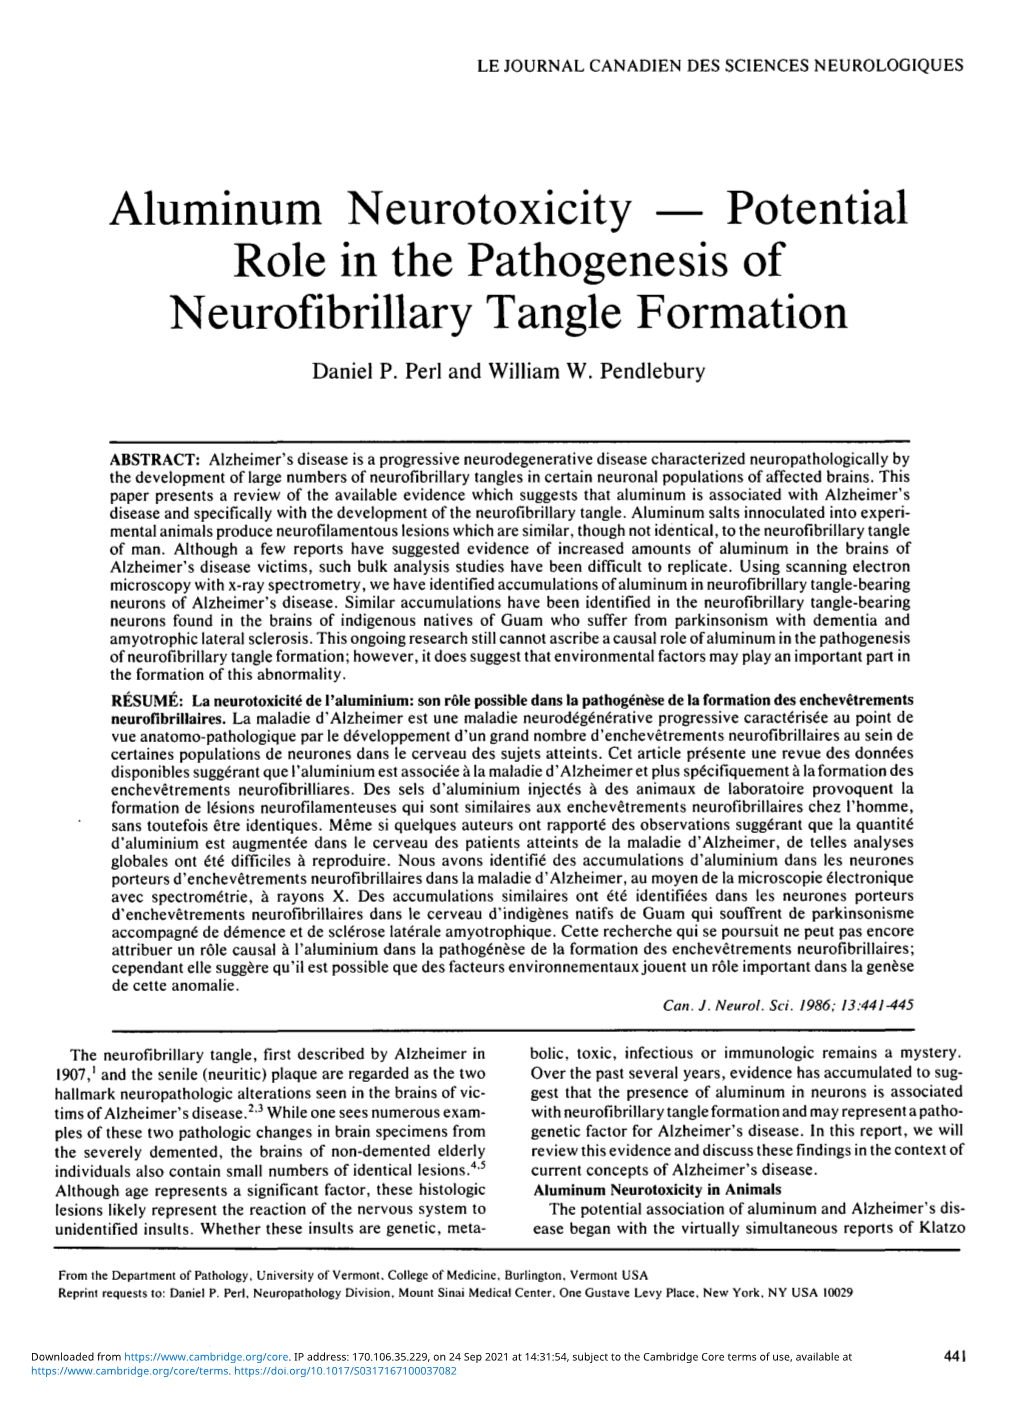 Aluminum Neurotoxicity — Potential Role in the Pathogenesis of Neurofibrillary Tangle Formation Daniel P